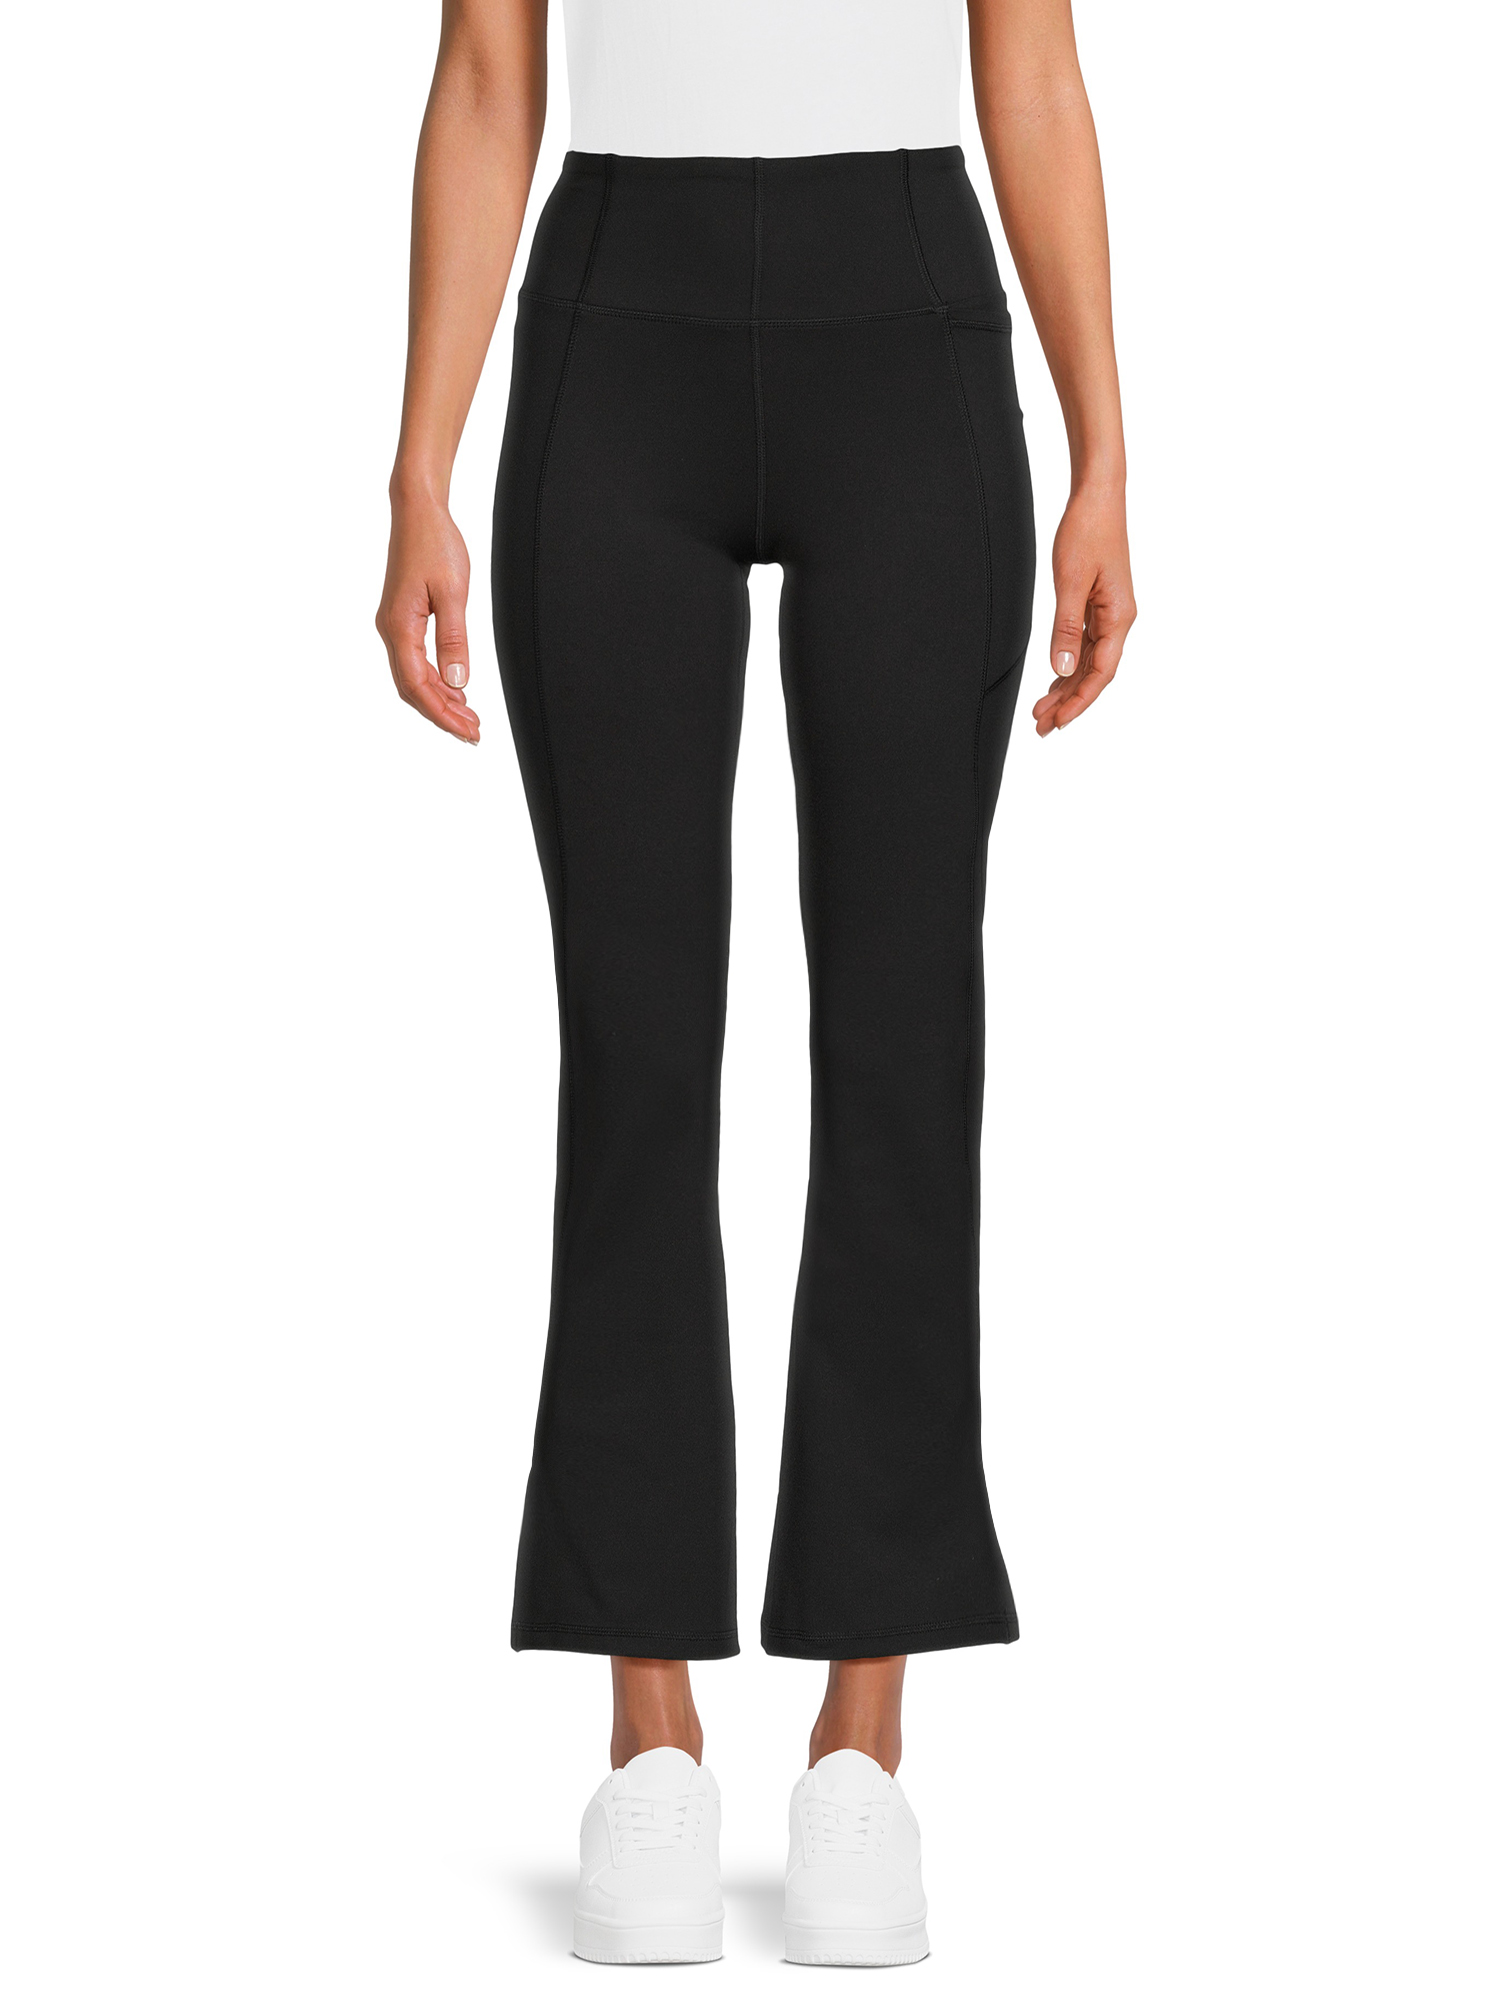 Avia Women's Flare Pants, Sizes XS-3XL - Walmart.com